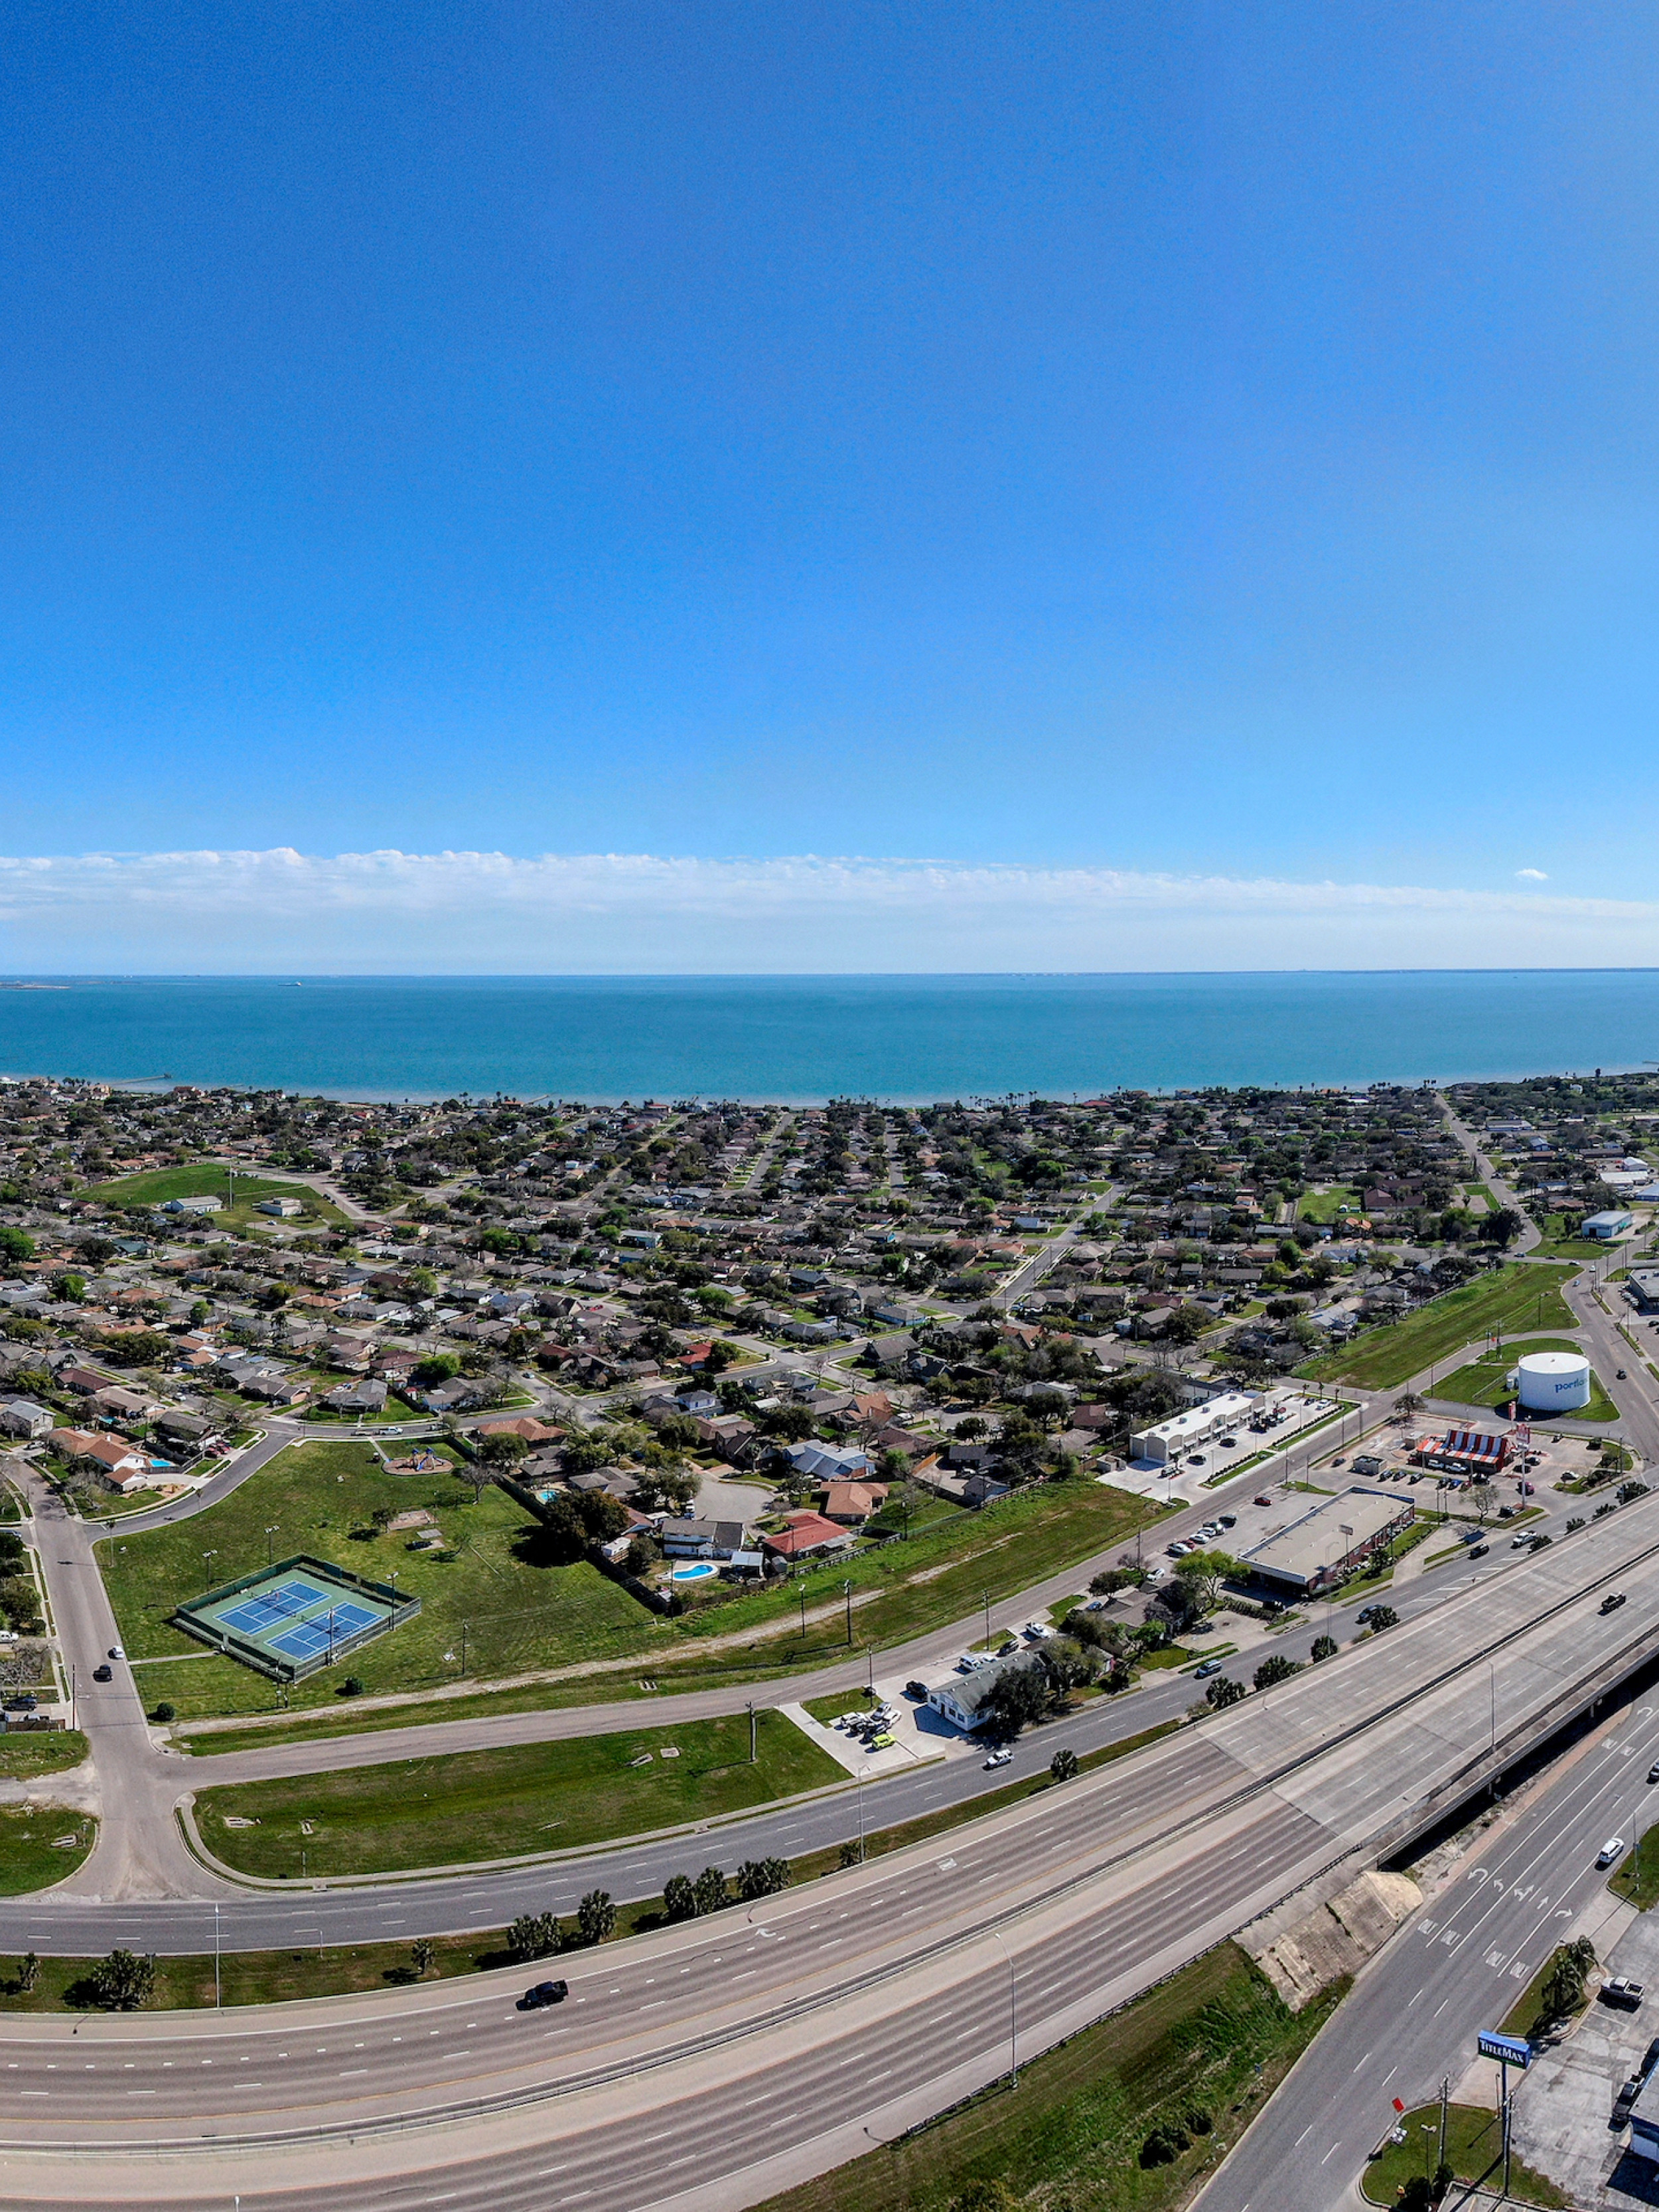 Aerial view of the bay overseeing a neighboorhood